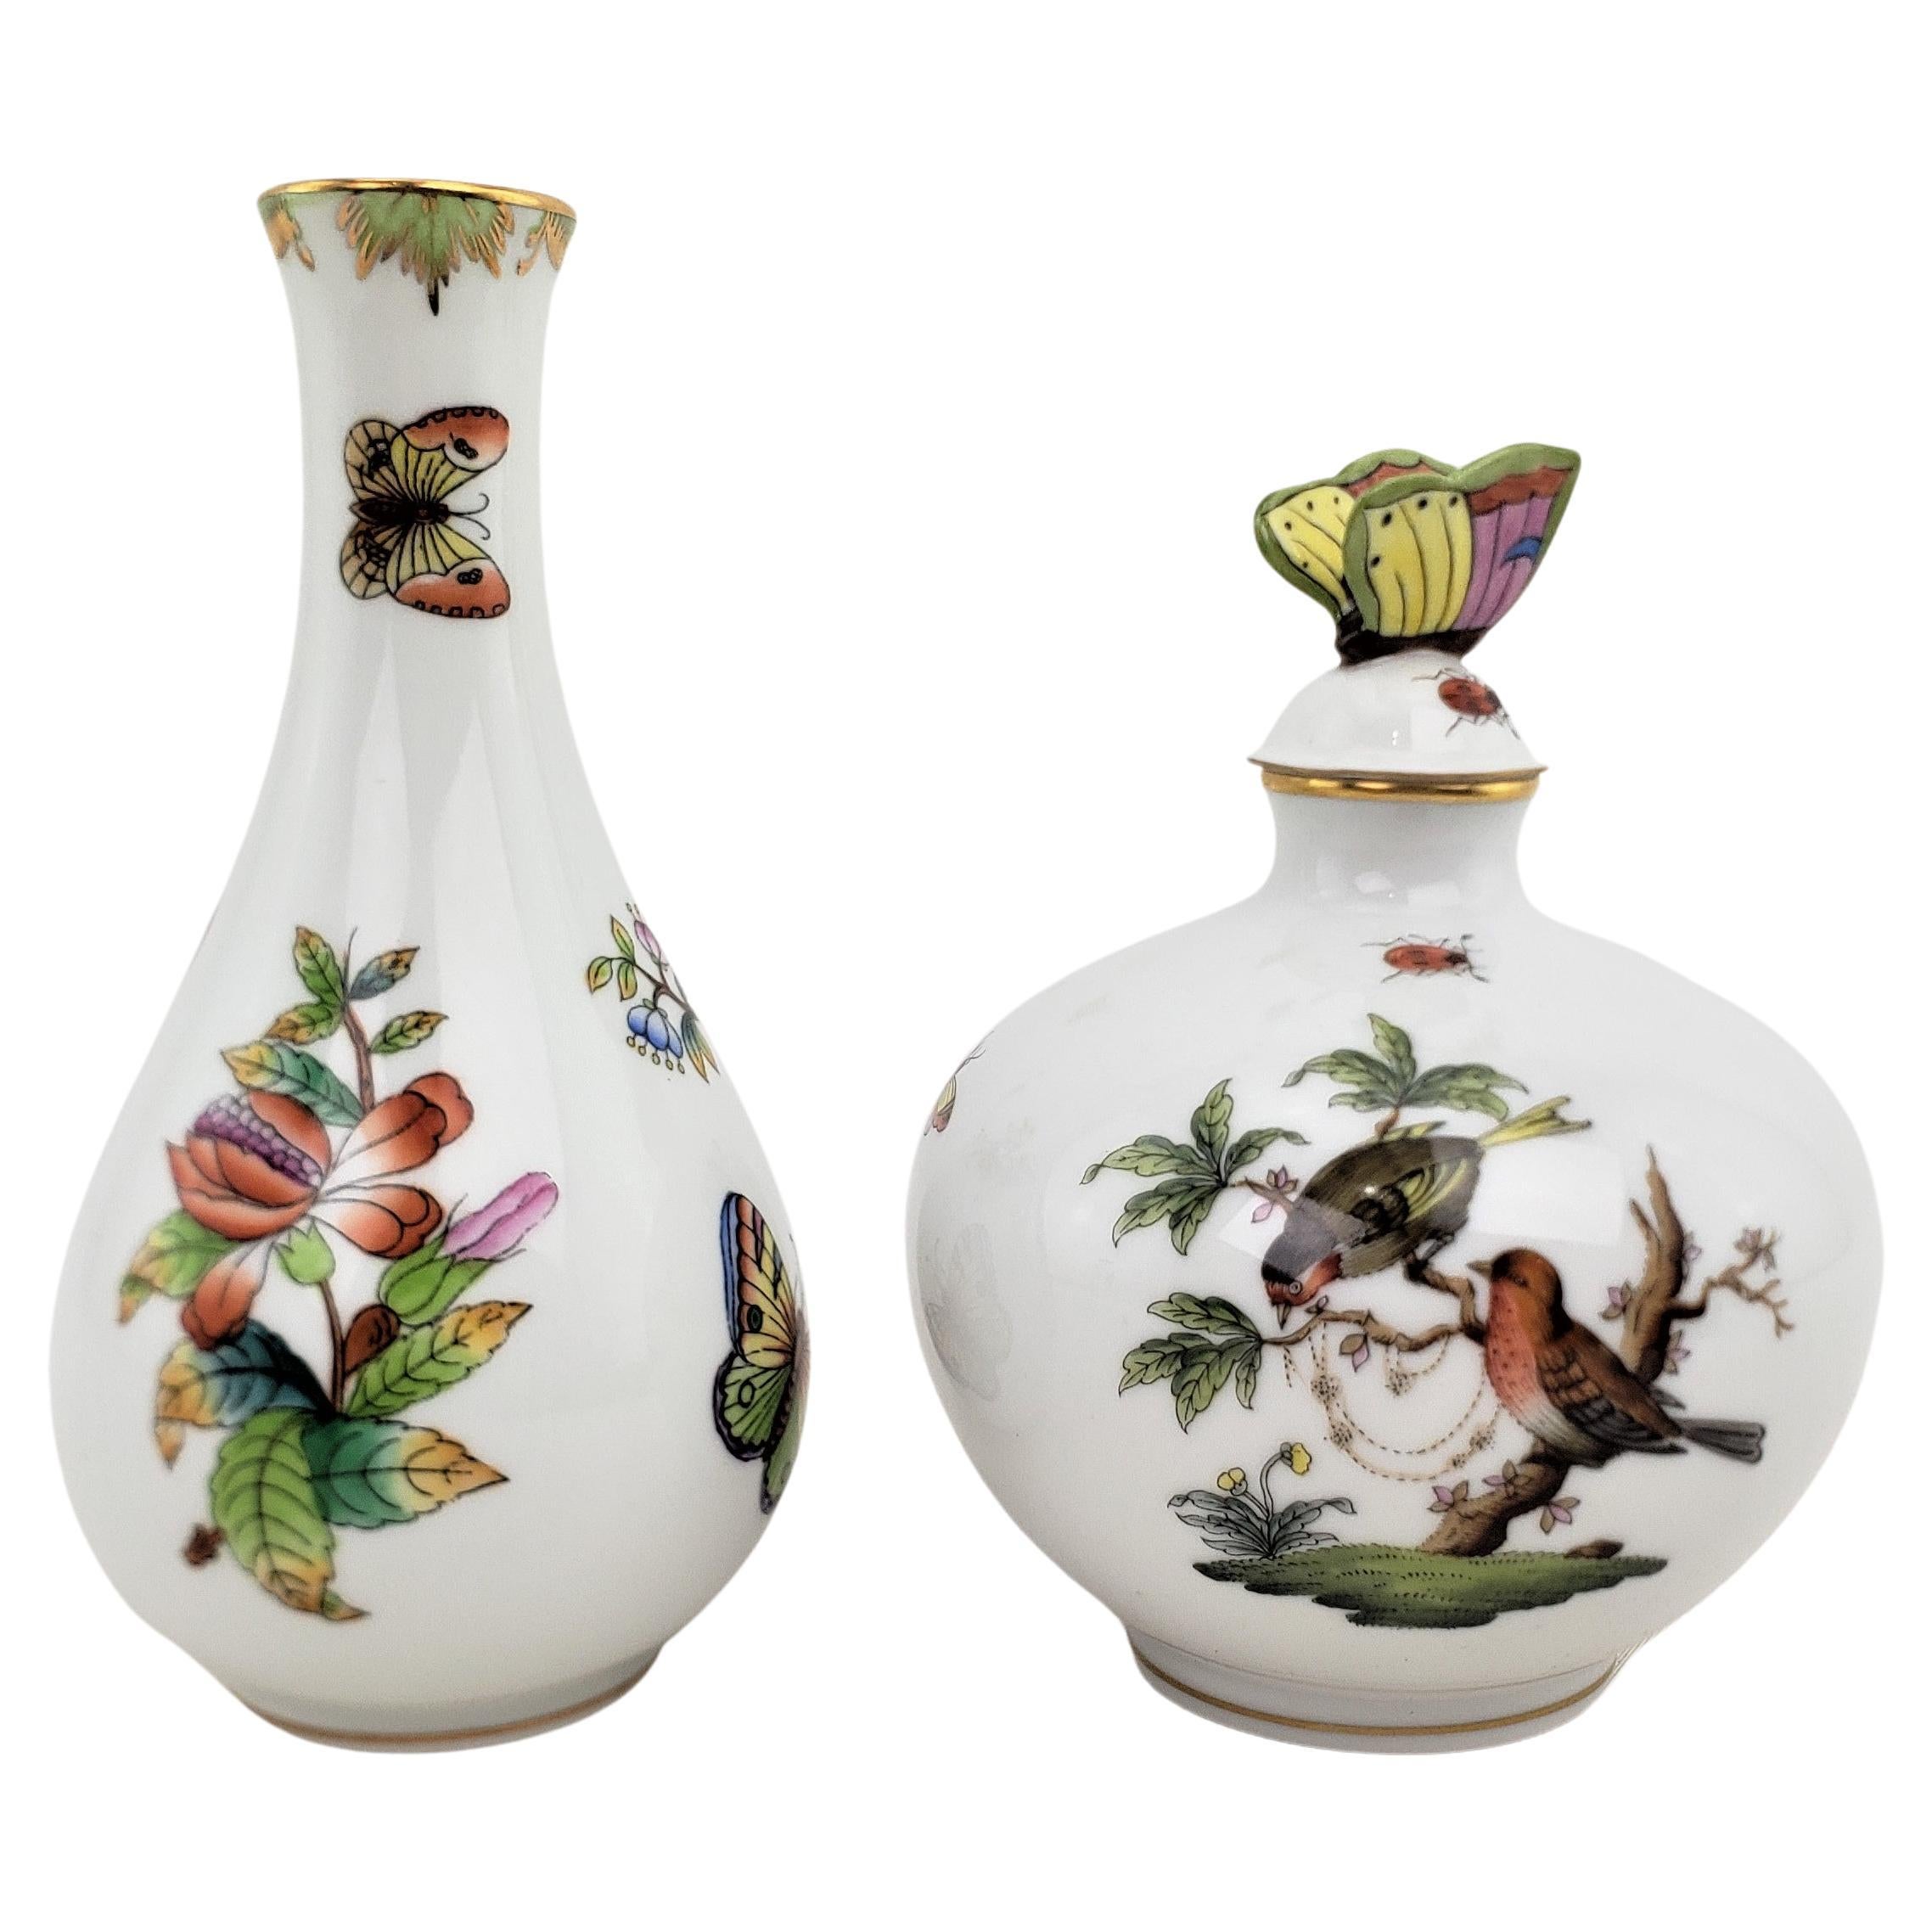 Herend Porcelana Rothschild Pájaros Perfume Botella y Jarrón Reina Victoria Pareja